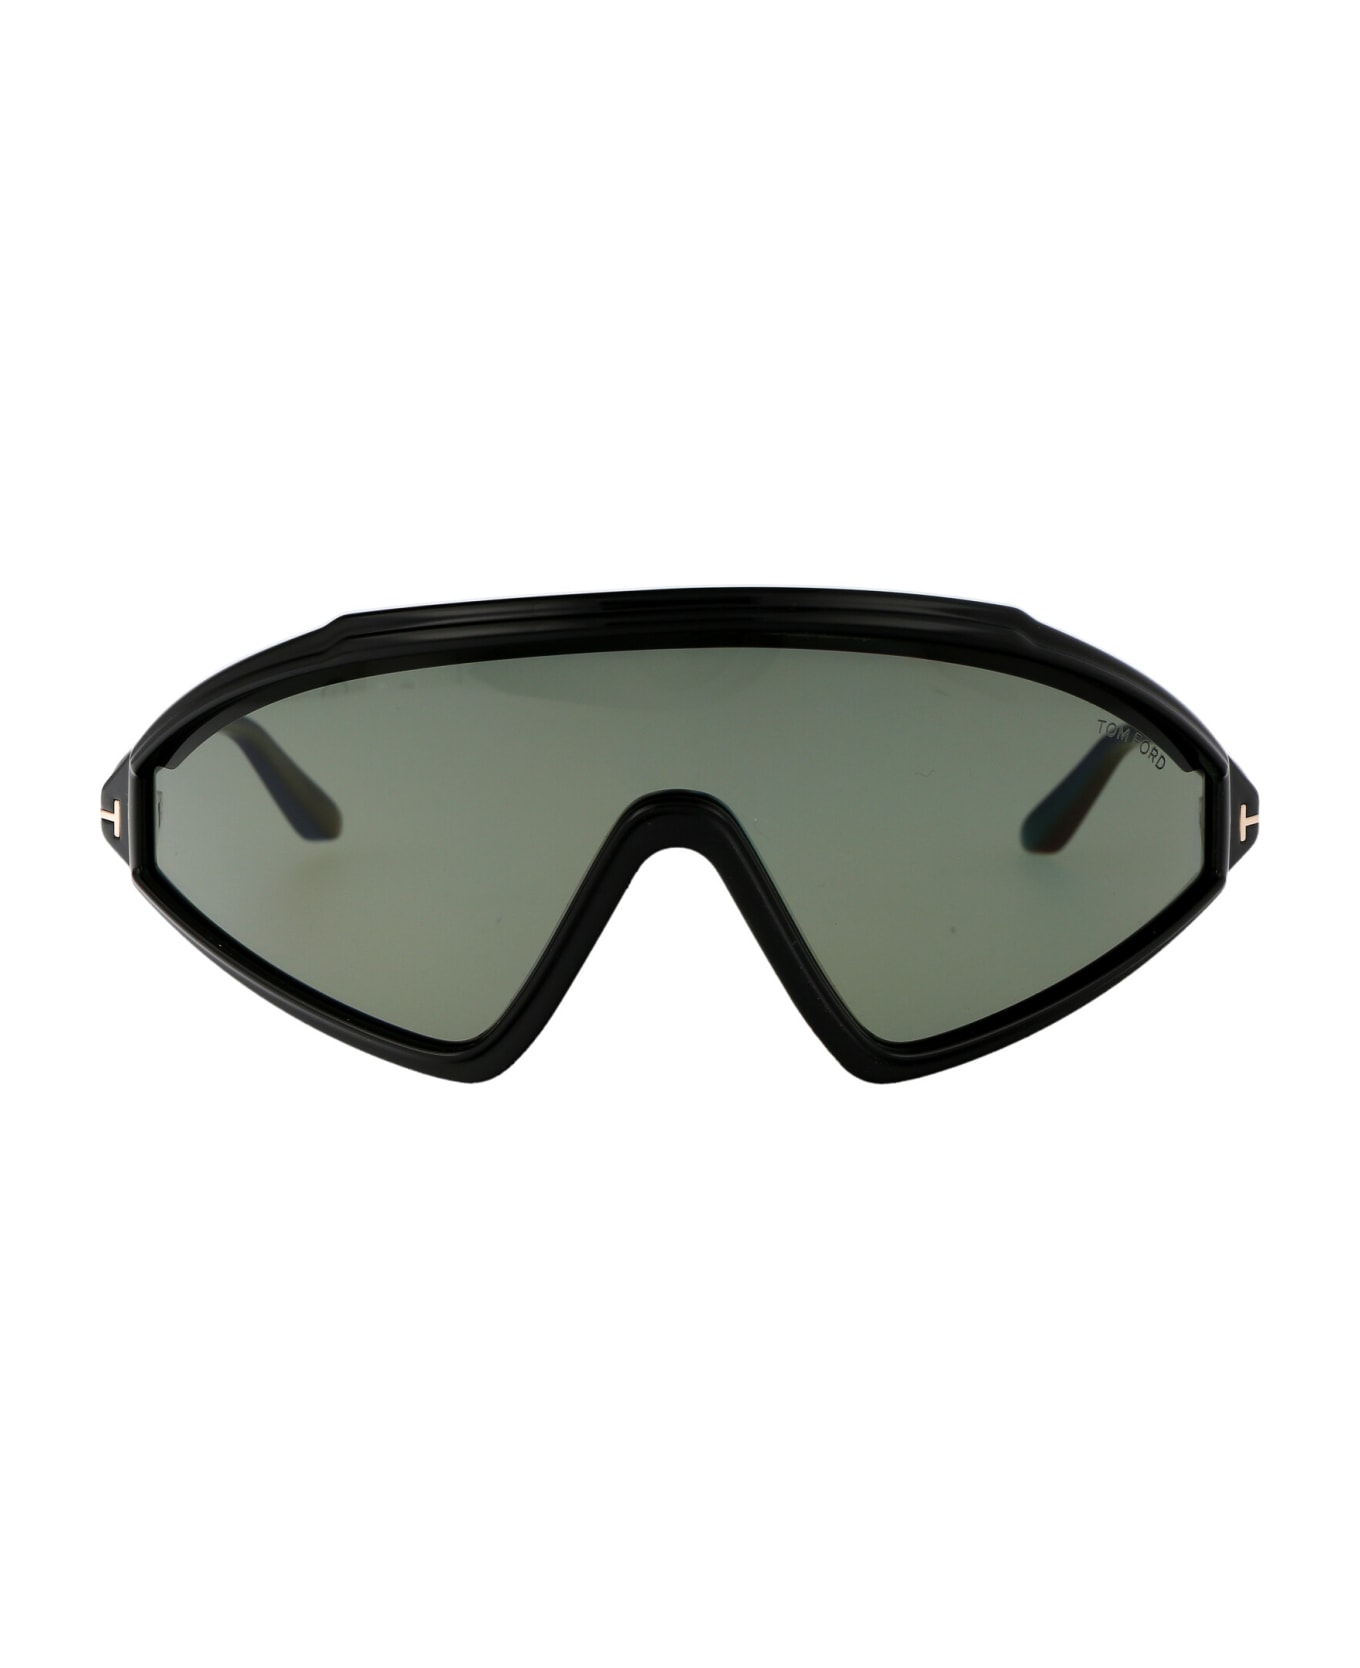 Tom Ford Eyewear Lorna UVEX Sunglasses - 05A Nero/Altro / Fumo